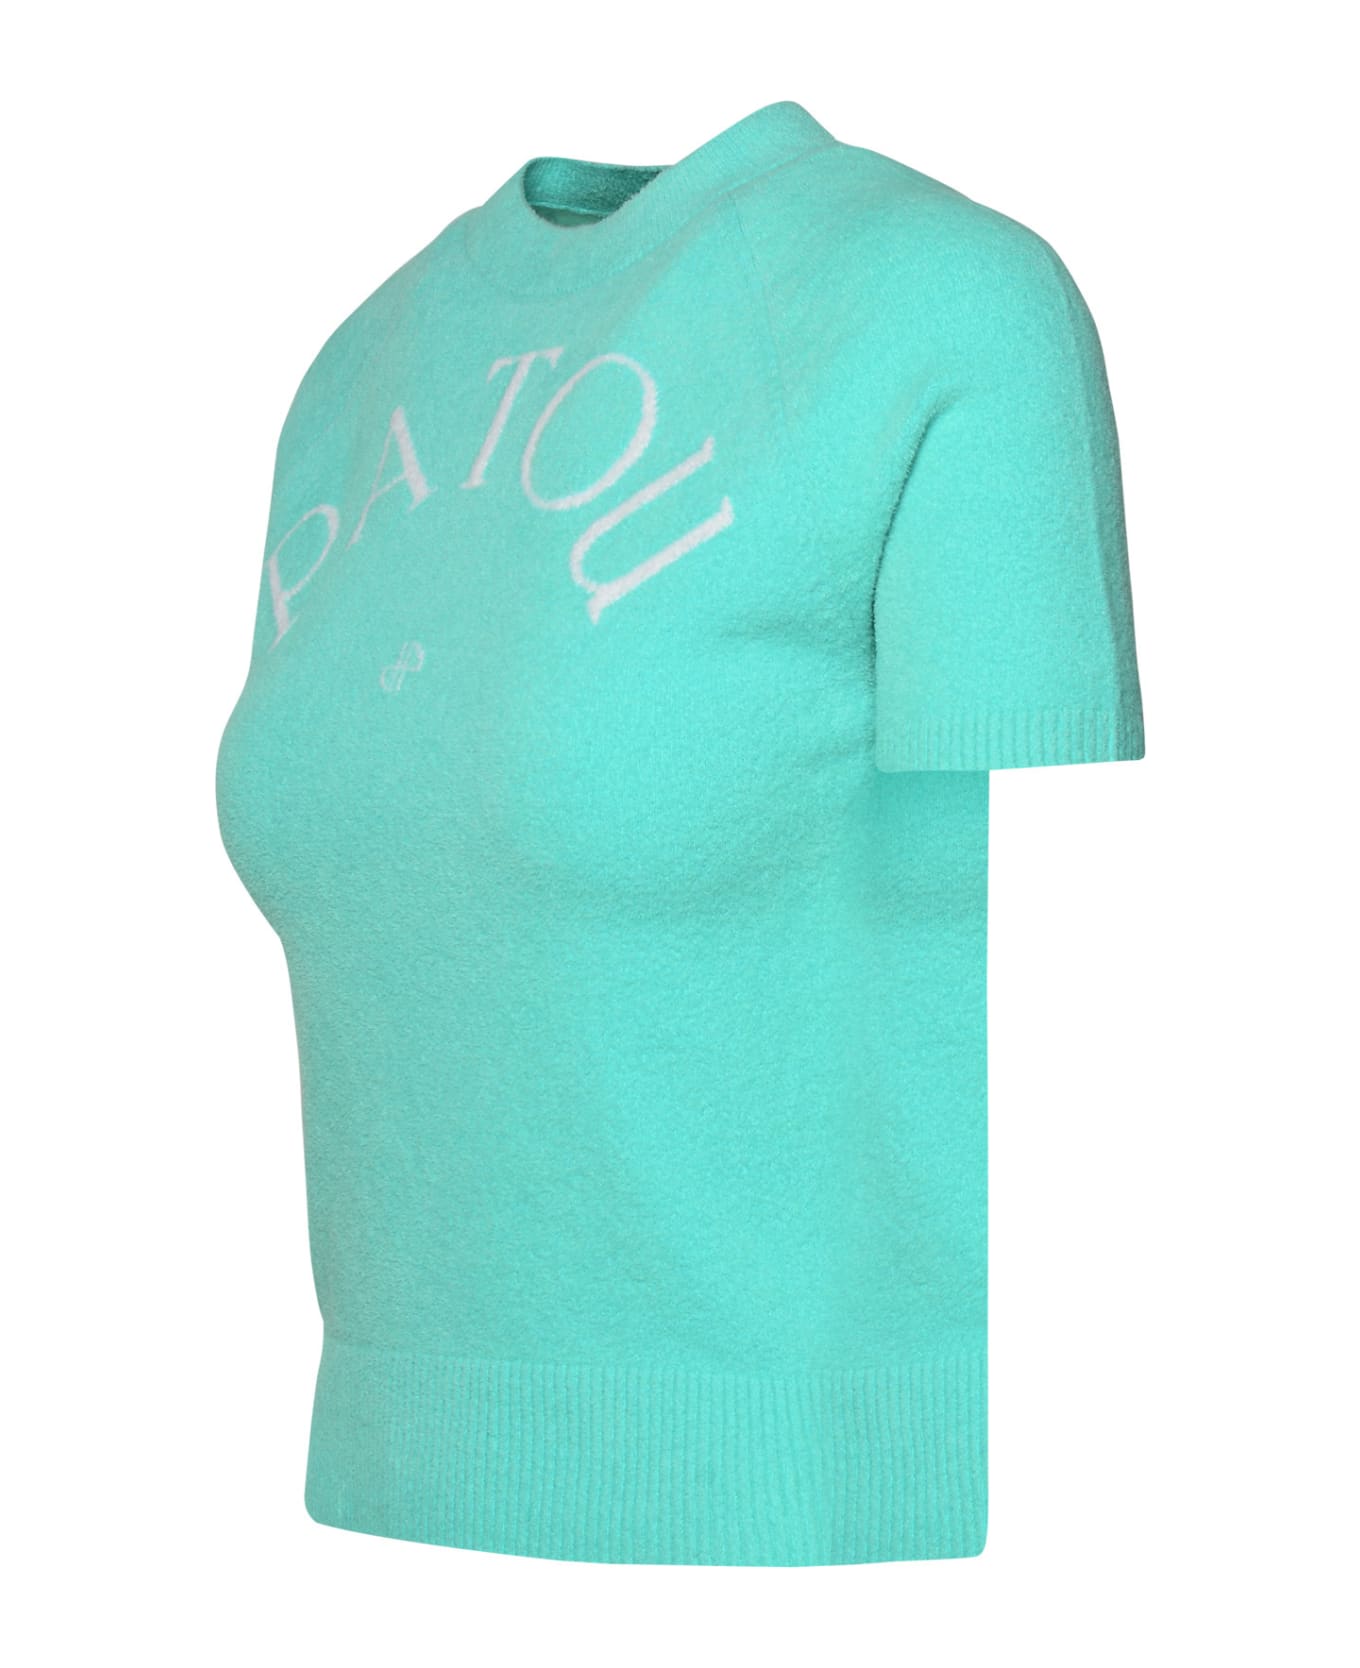 Patou Teal Cotton Blend Sweater - Light Blue Tシャツ